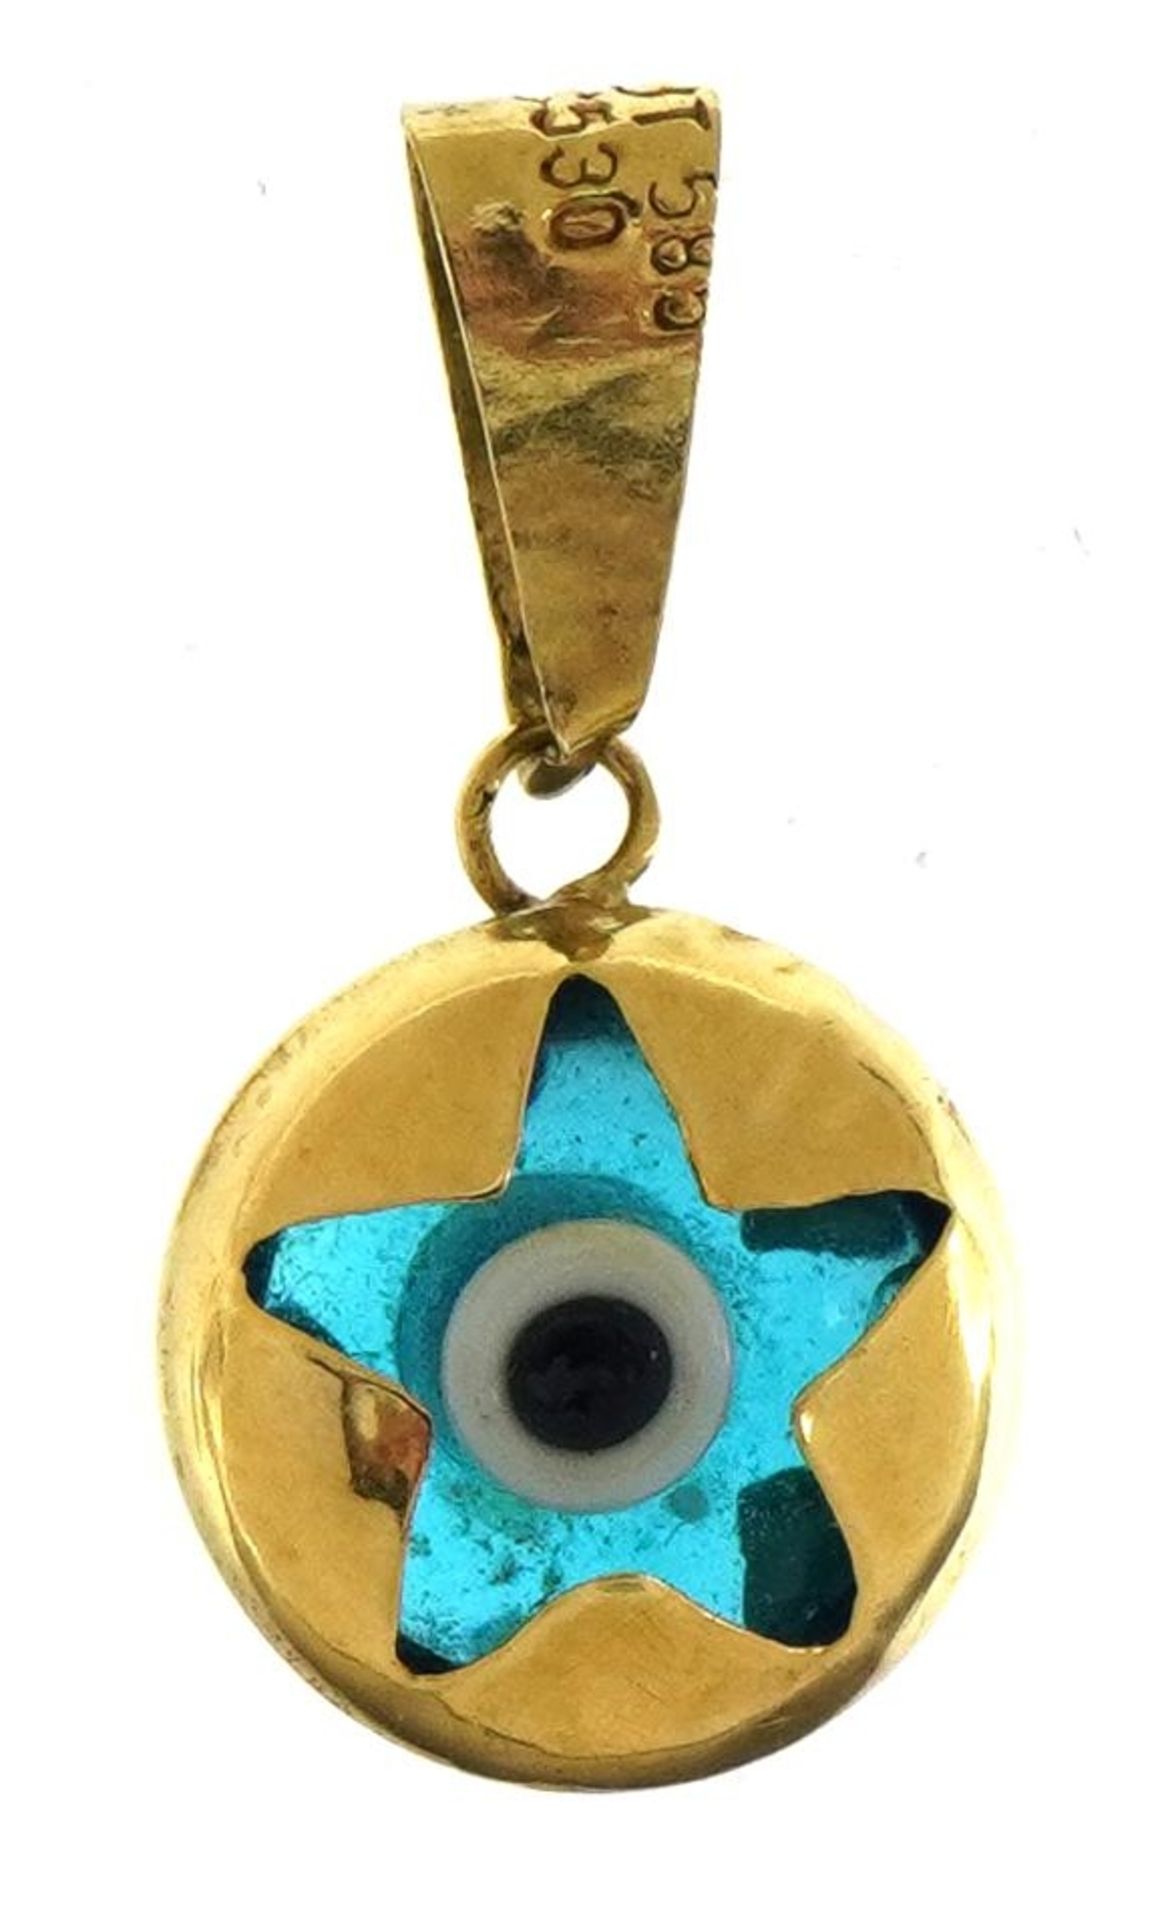 14ct gold all seeing eye pendant, 1.8cm high, 0.6g